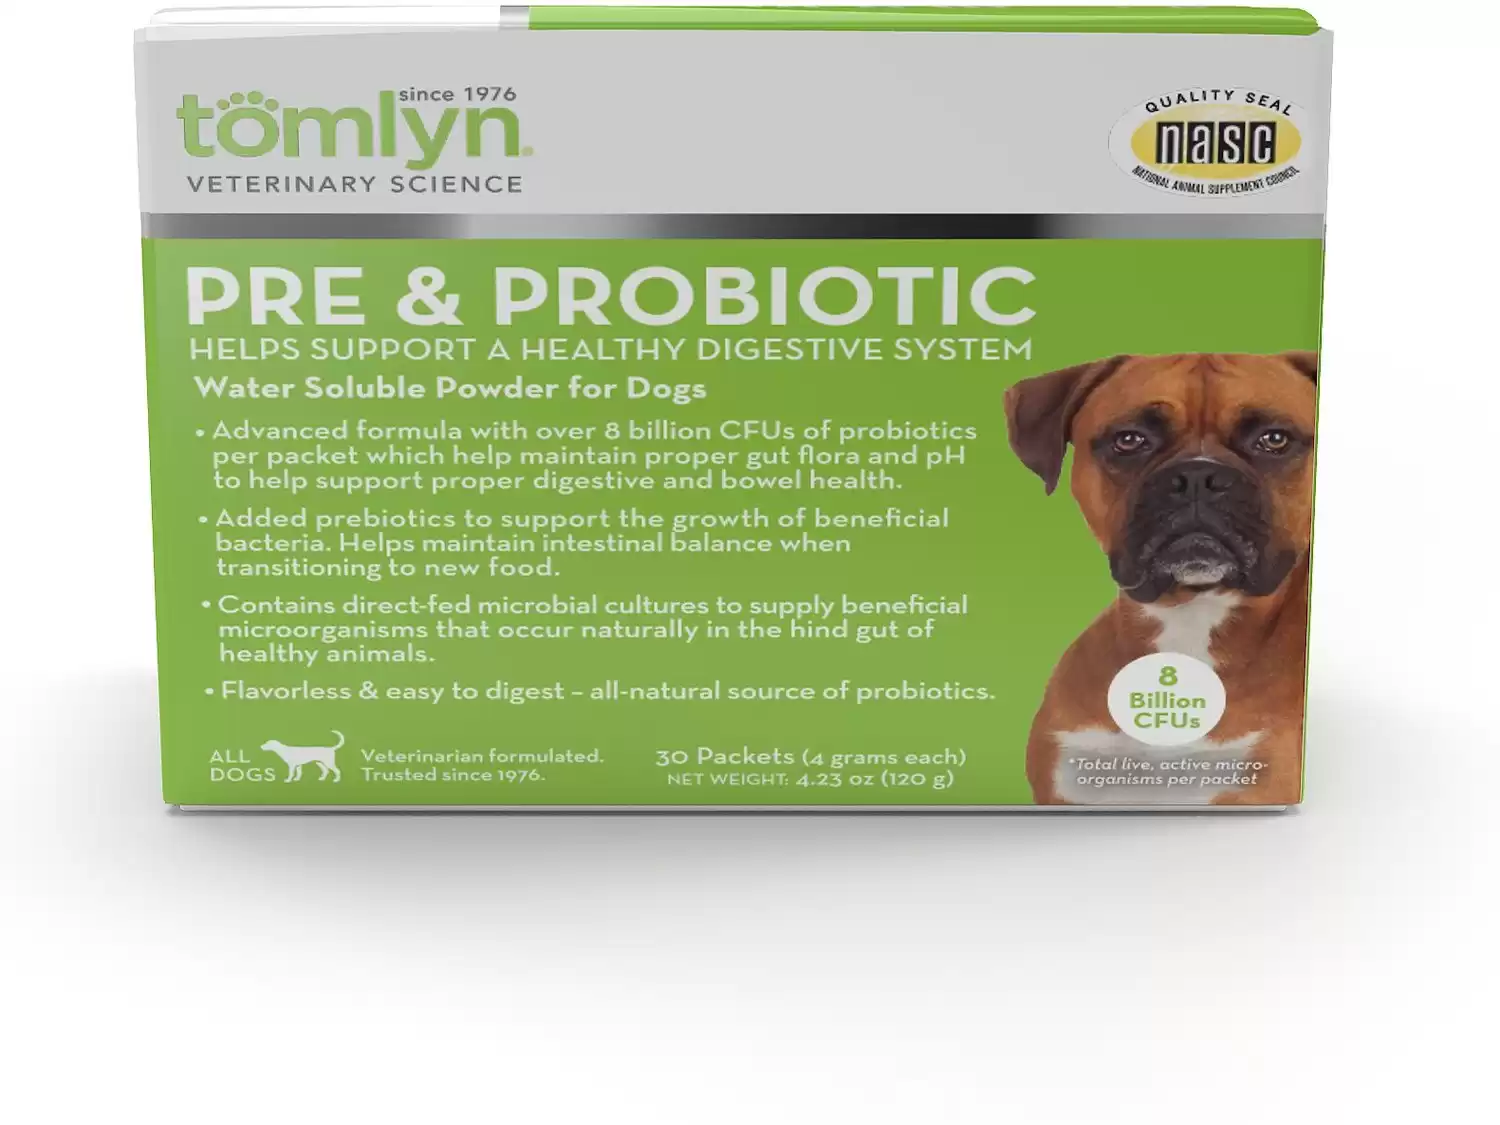 Tomlyn Pre & Probiotic Powder Digestive Supplement